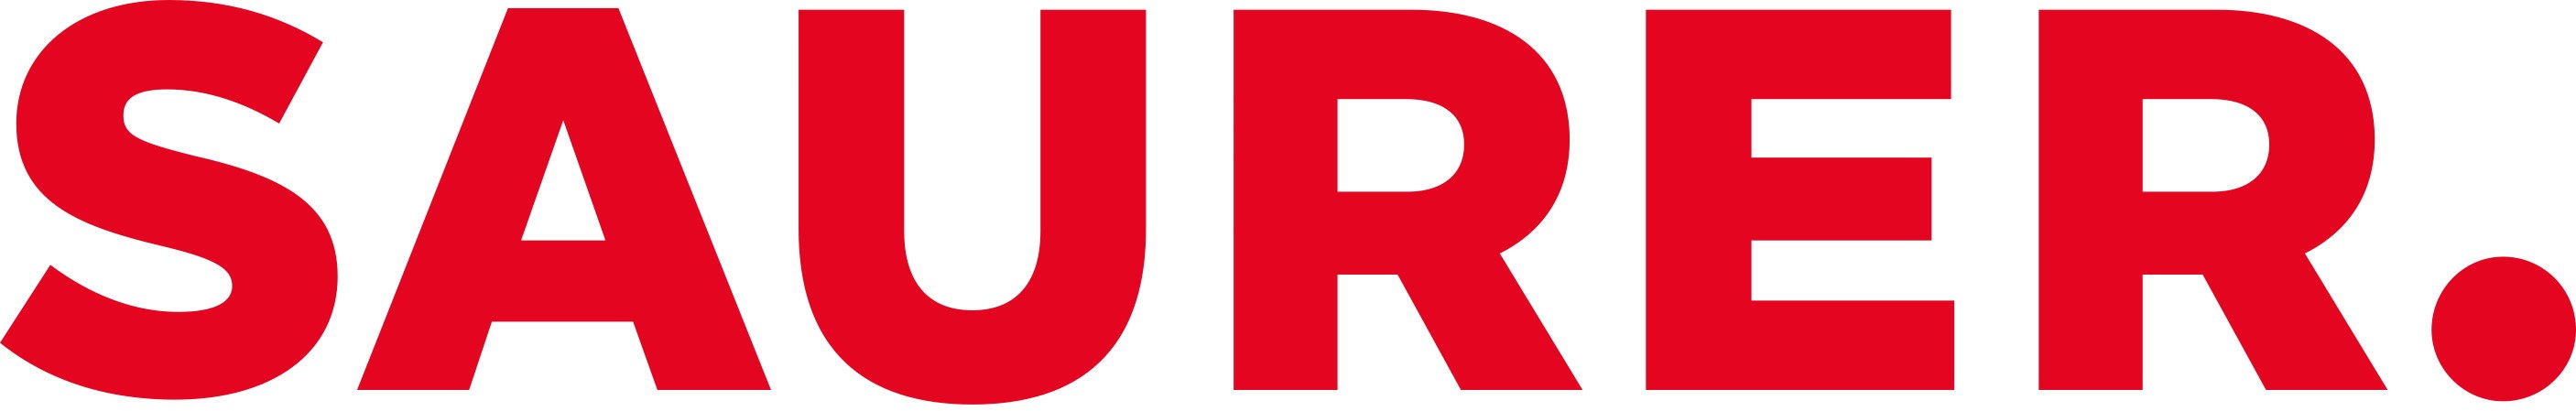 Saurer Logo, image, download logo | LogoWiki.net